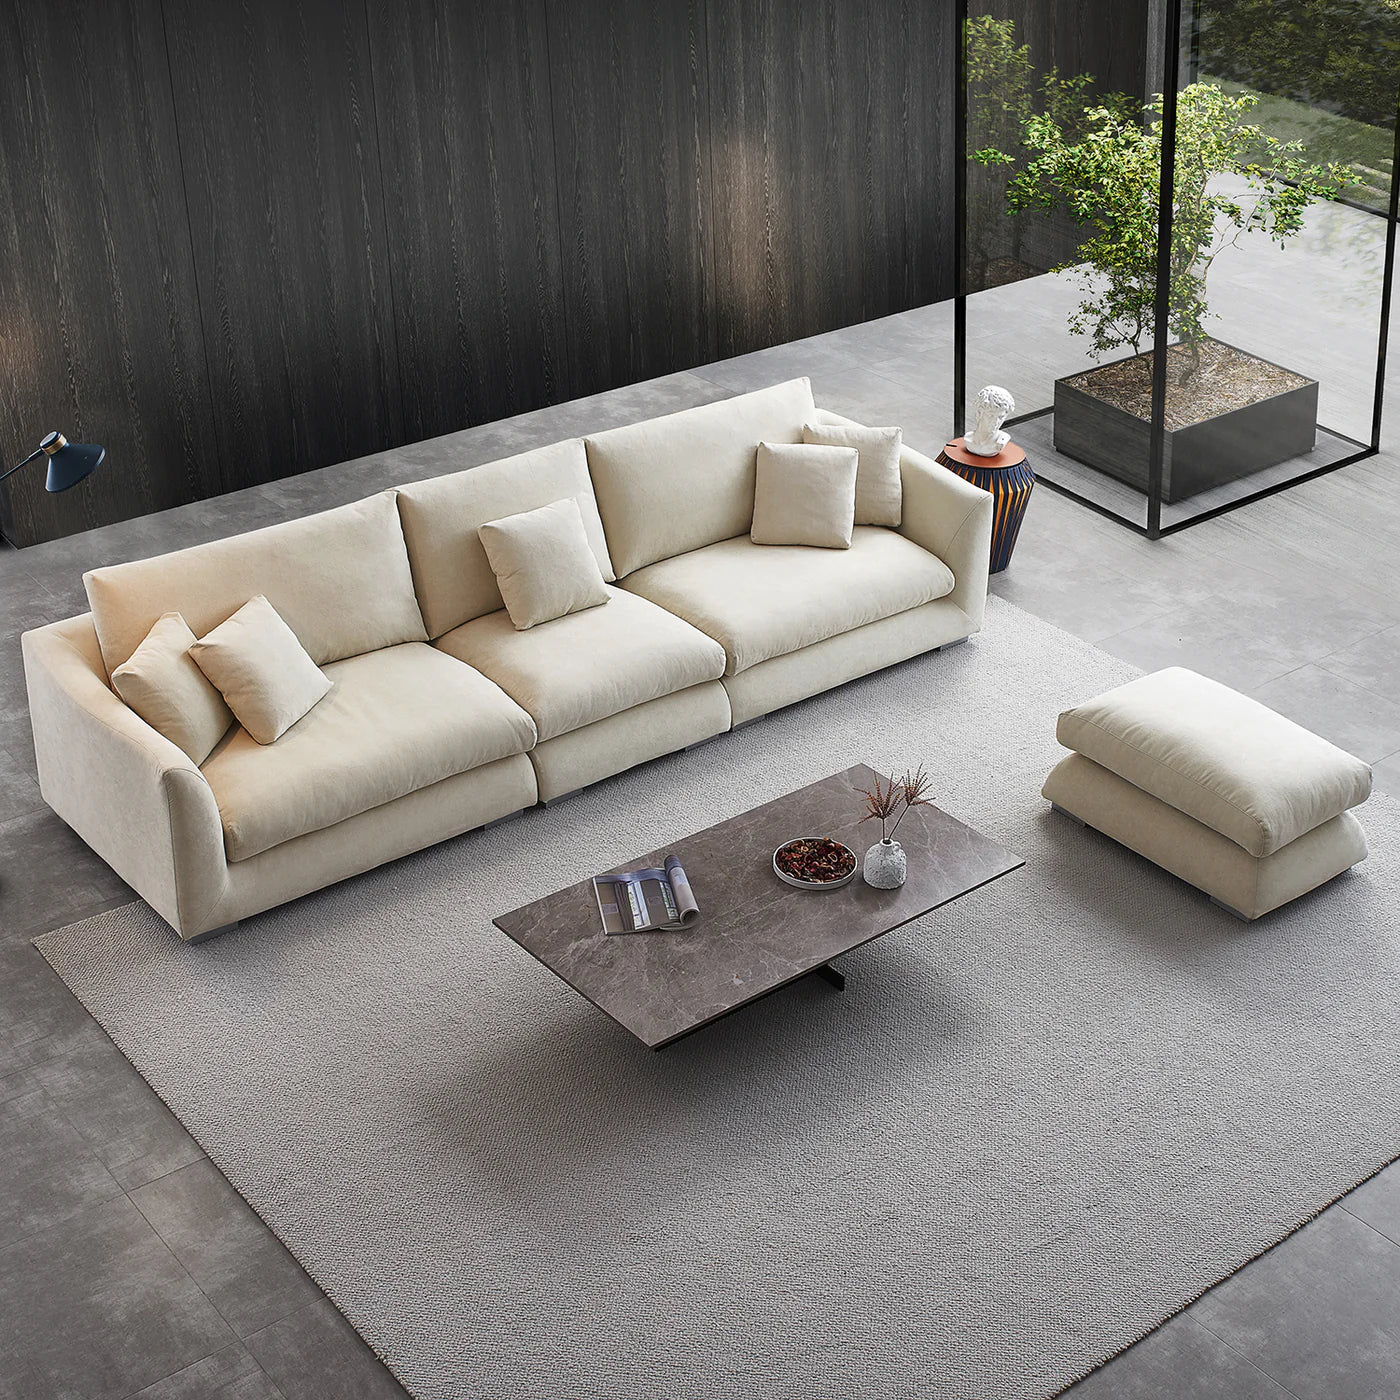 Beech wood sofa and pouf, 85 x 250 cm - SBF130